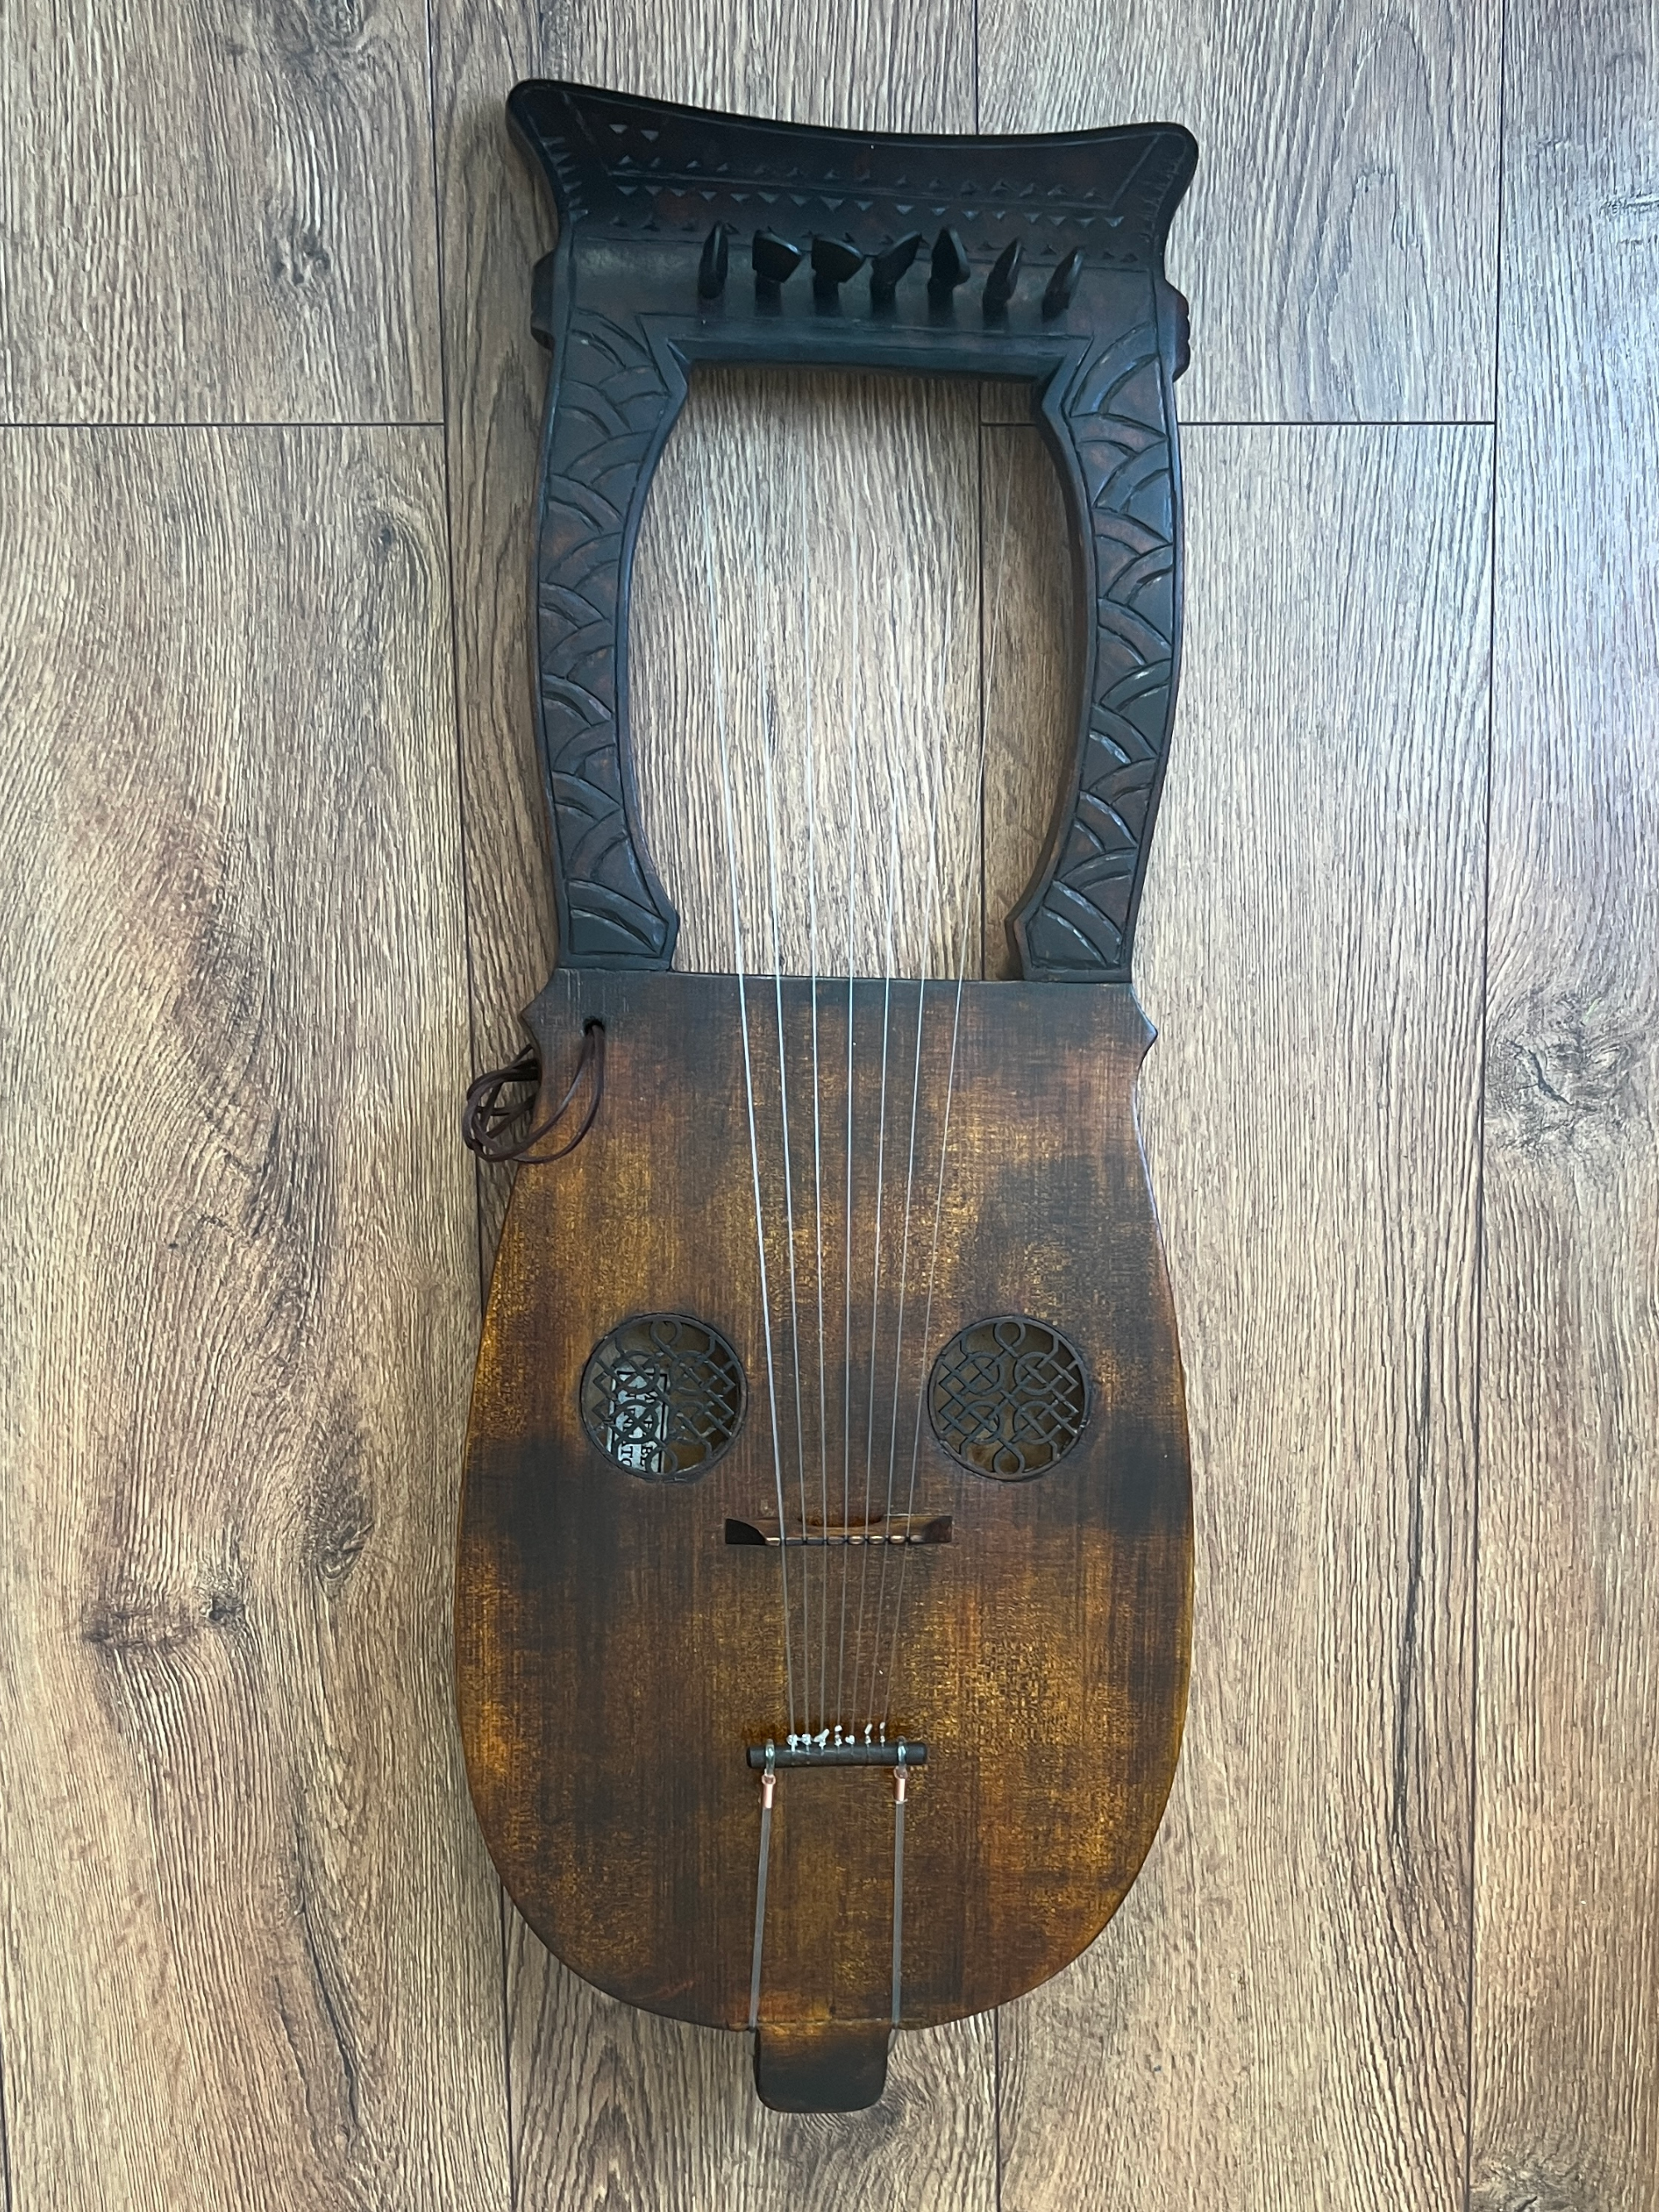 kravik lyra/lyre custom model with celtic/viking soundholes. Spruce/Birch wood